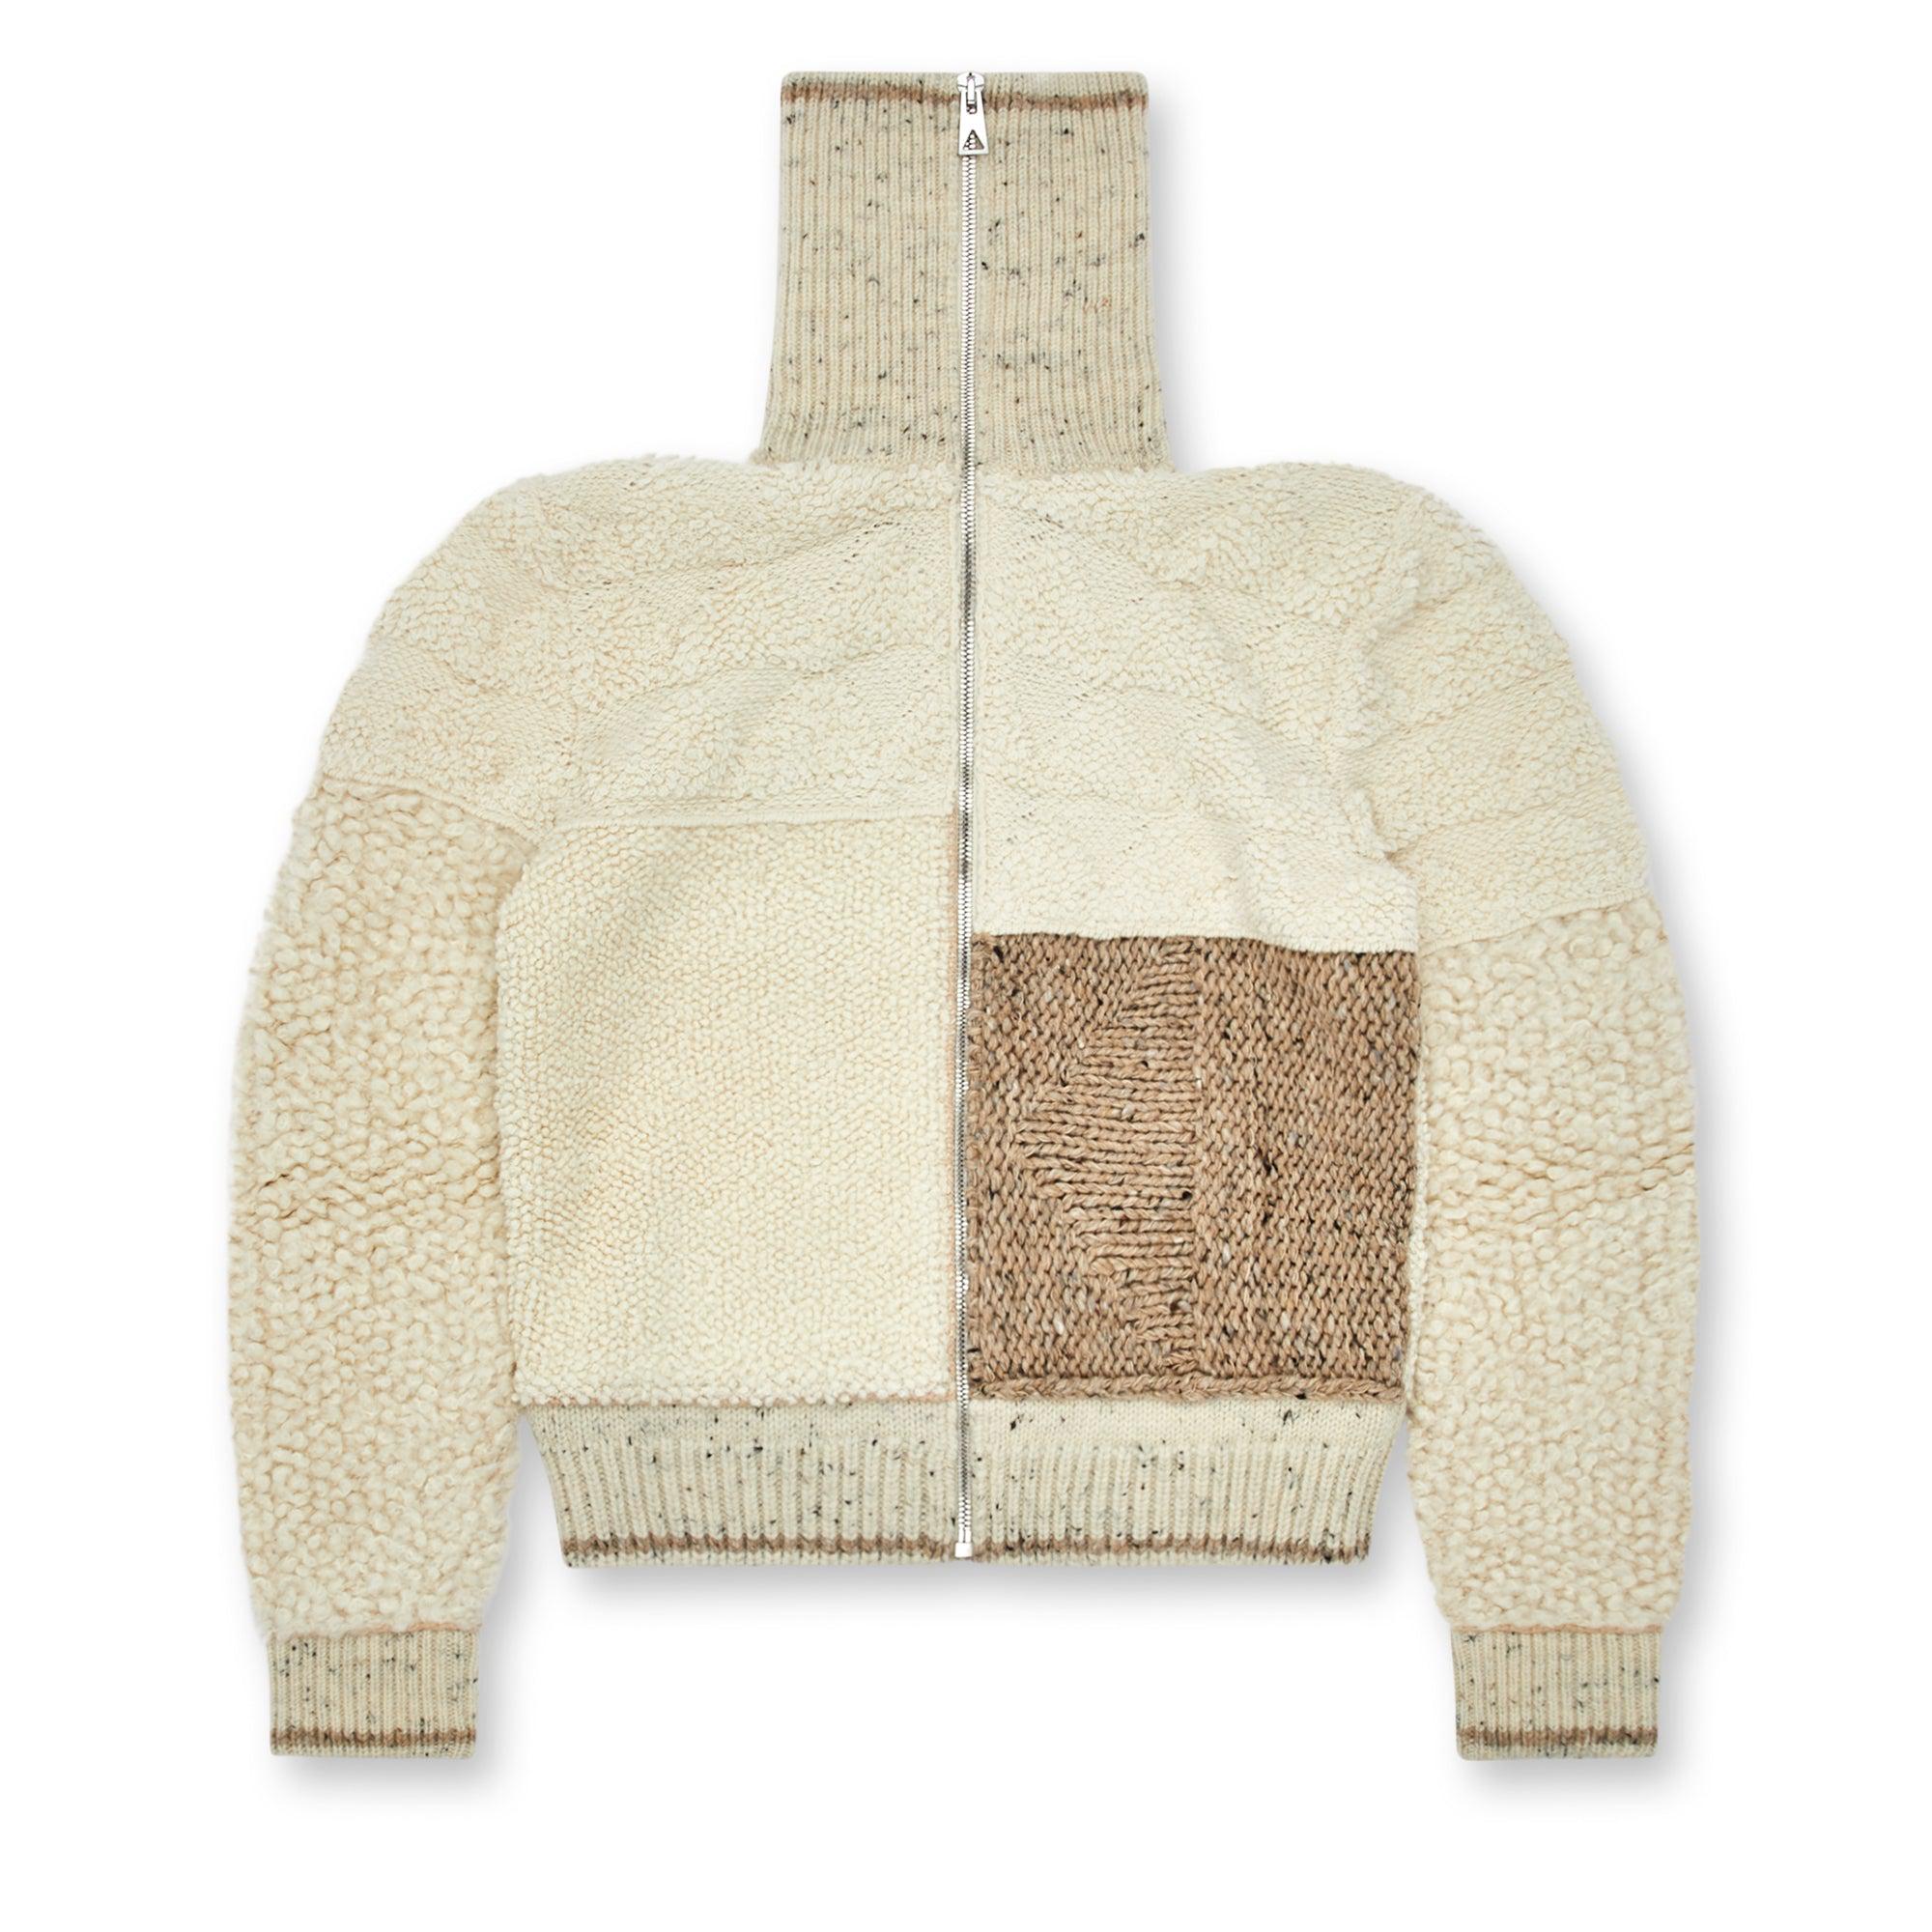 Bottega Veneta Men's Patchwork Wool Cardigan (Sand Melange) by BOTTEGA VENETA